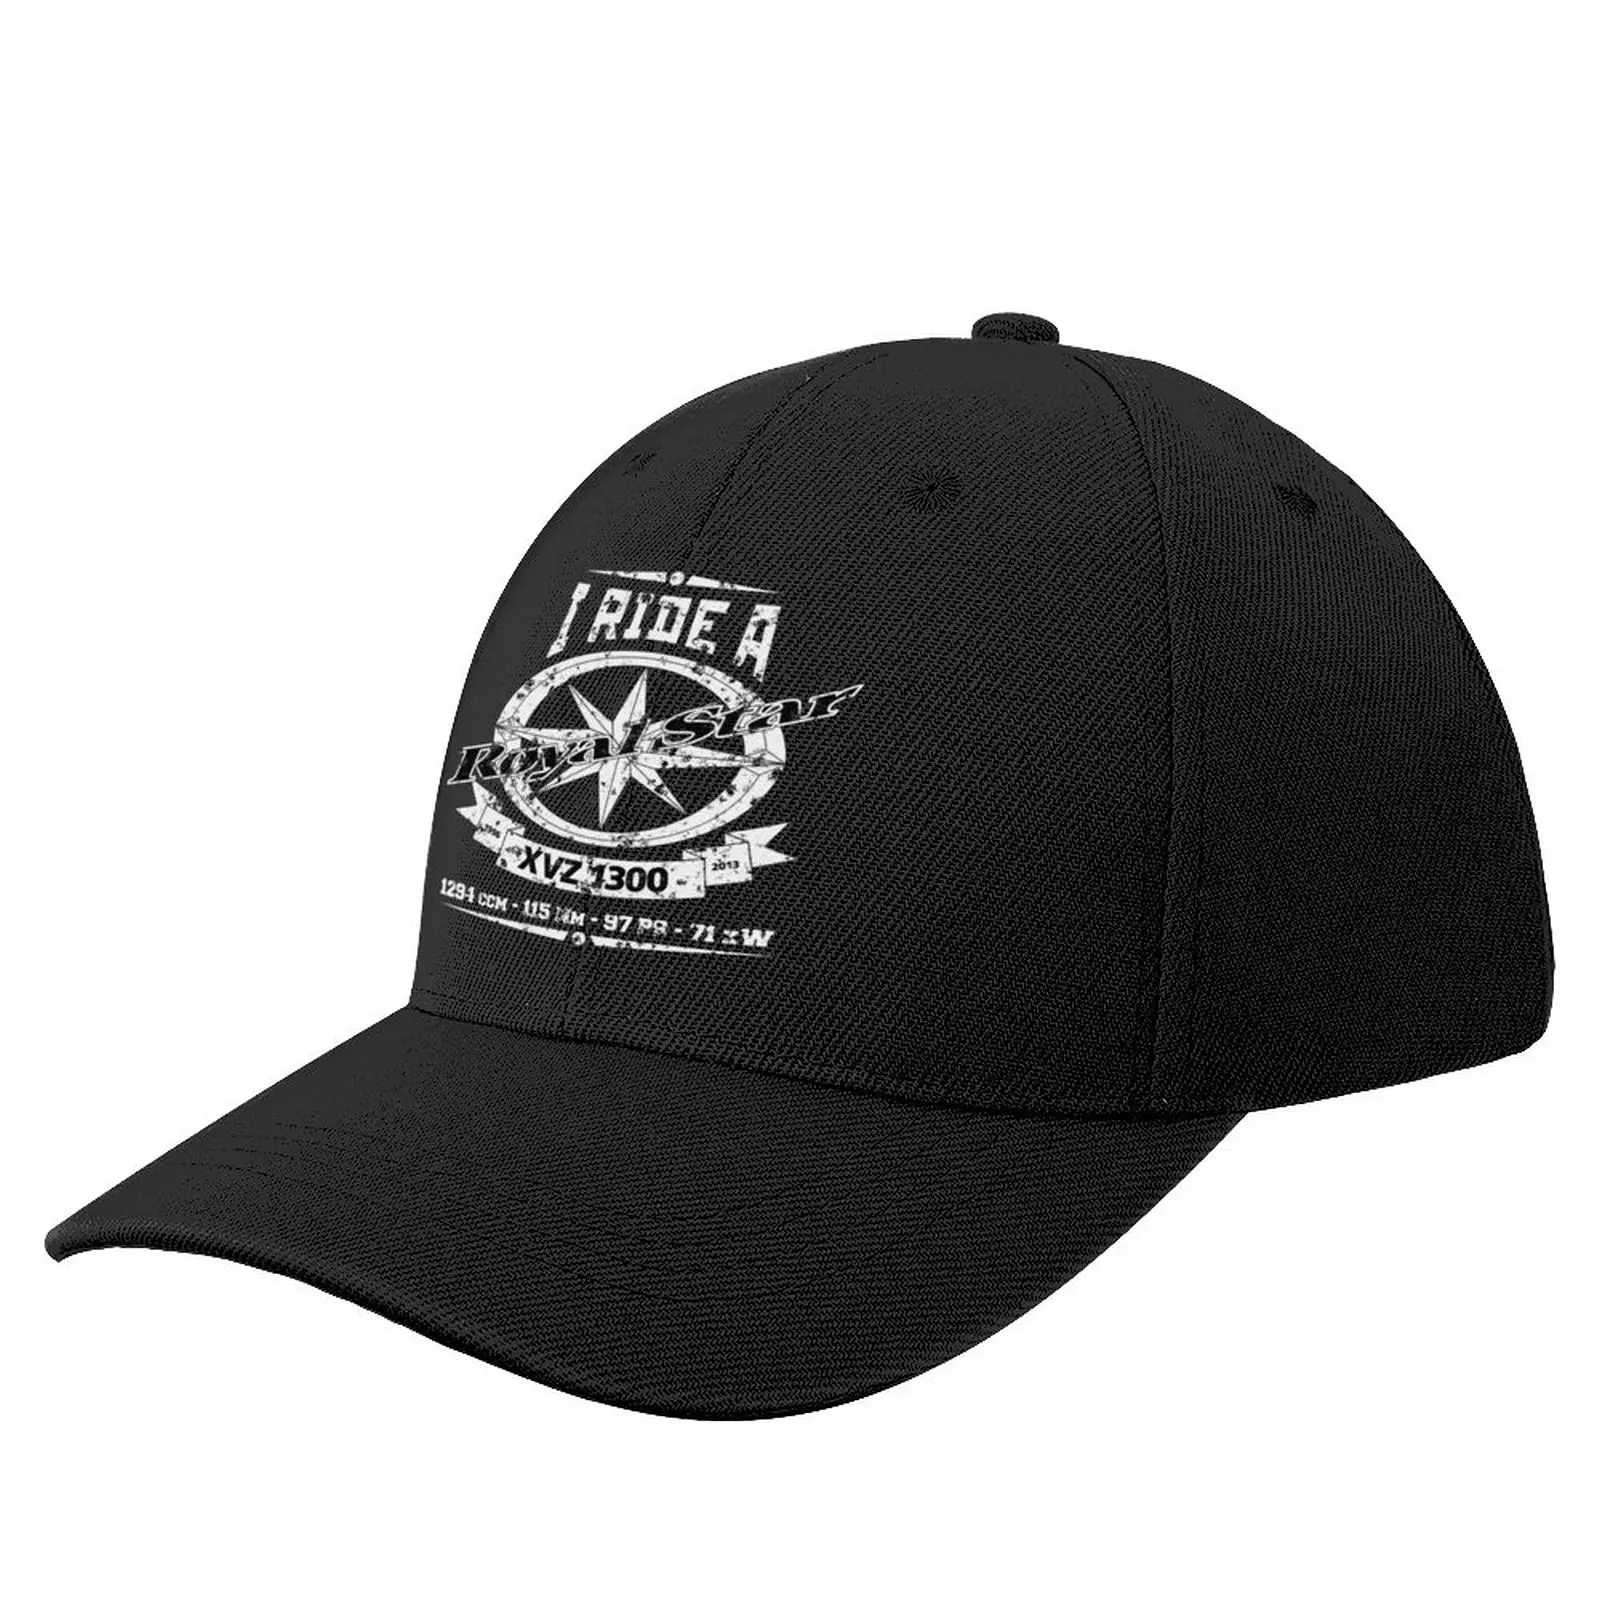 

I Ride A Royal Star XVZ 1300, XVZ1300 worn Baseball Cap beach hat Military Cap Man New In Hat Hats Hats Man Women'S